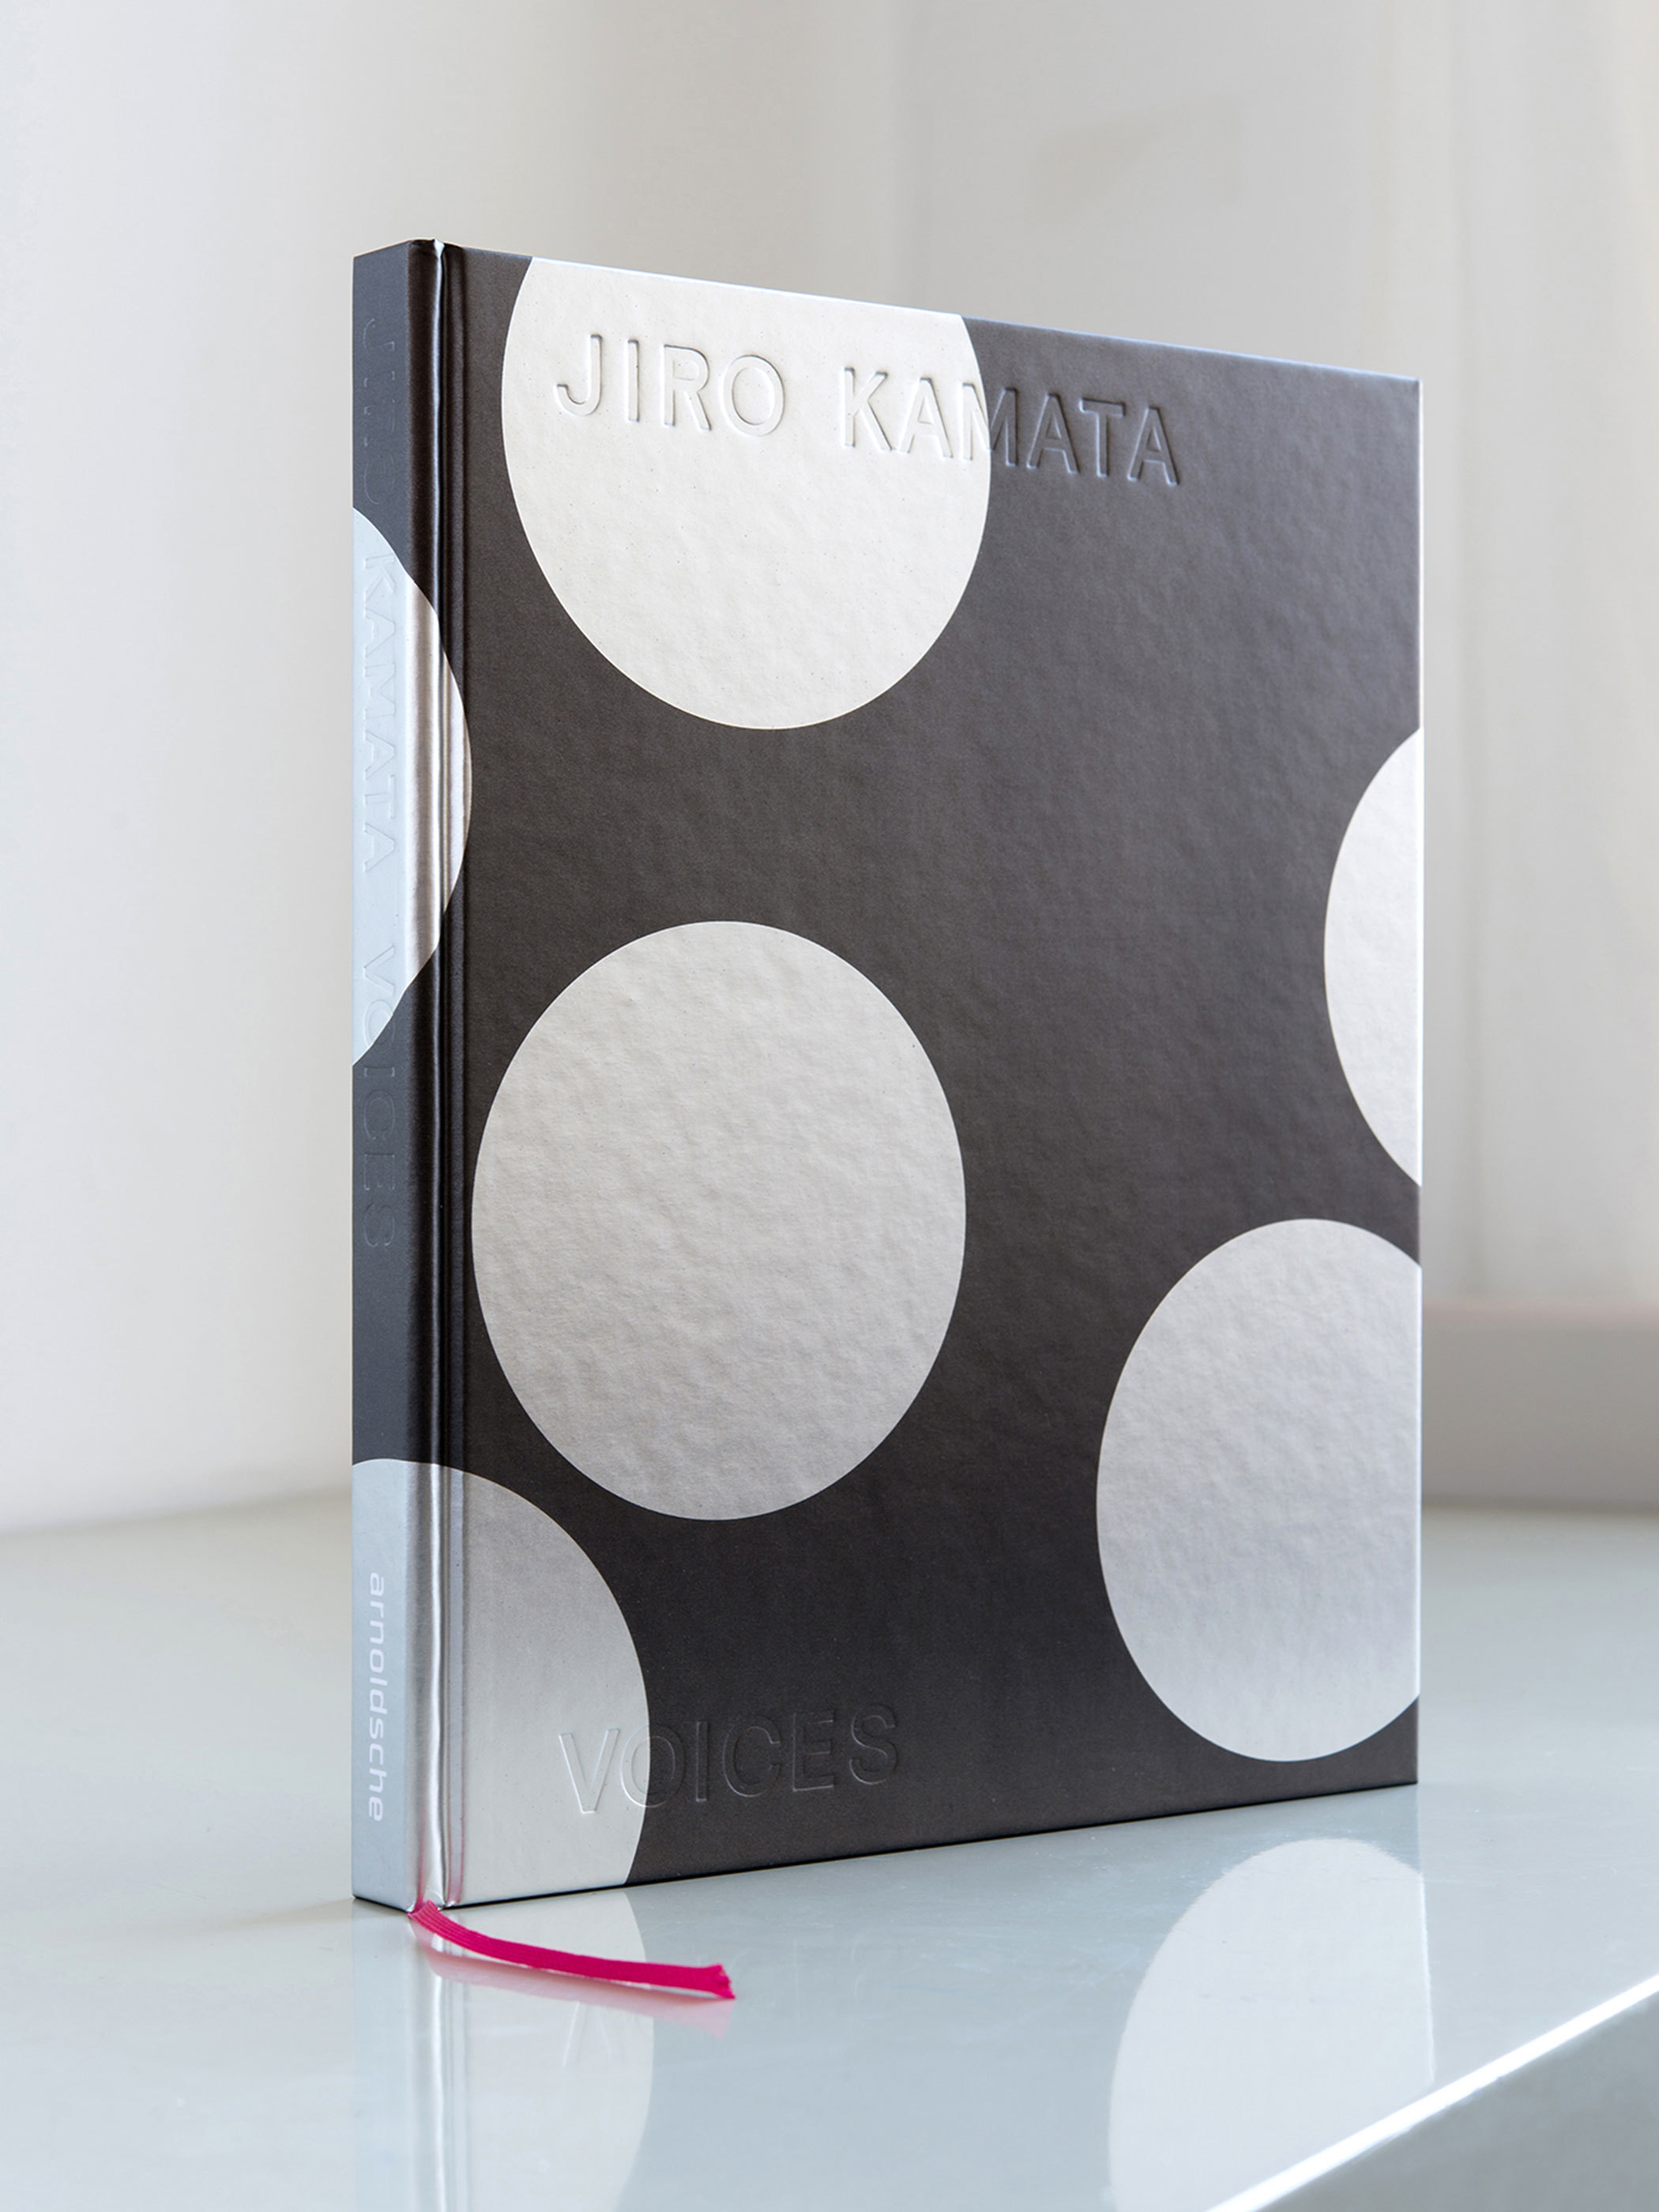 Jiro Kamata "VOICES" / Book